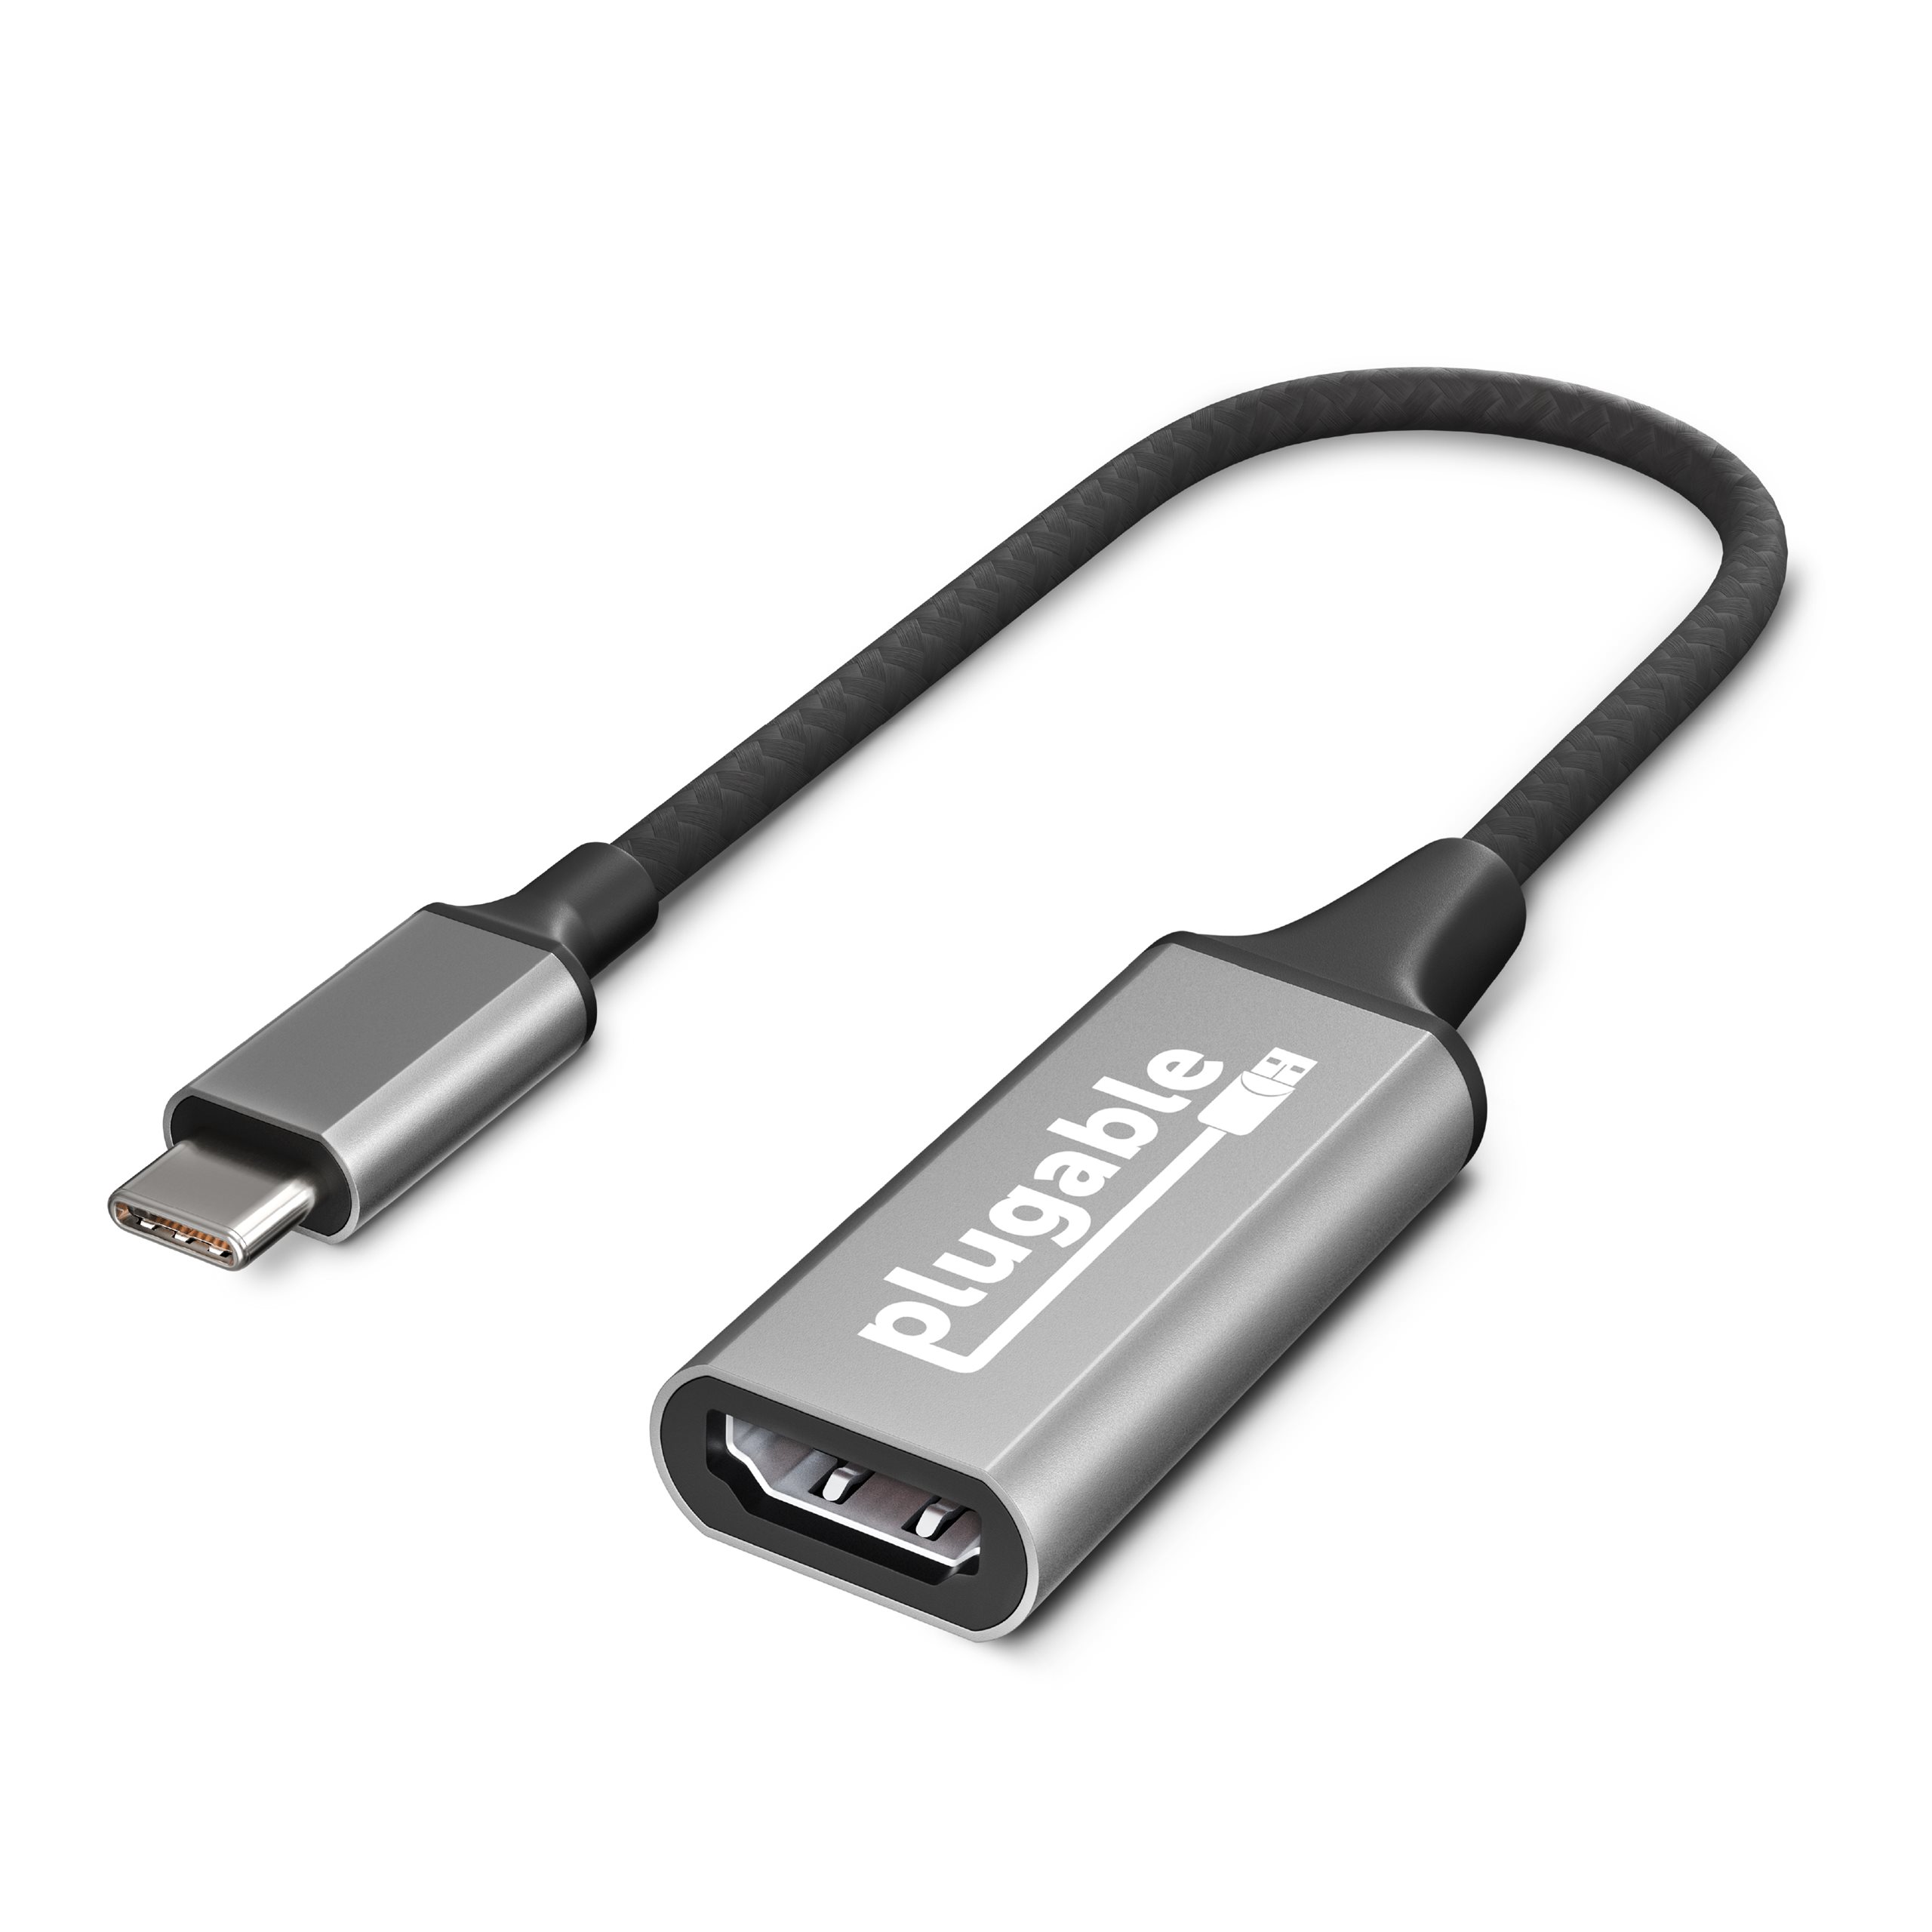 Plugable USB-C Multiport Adapter